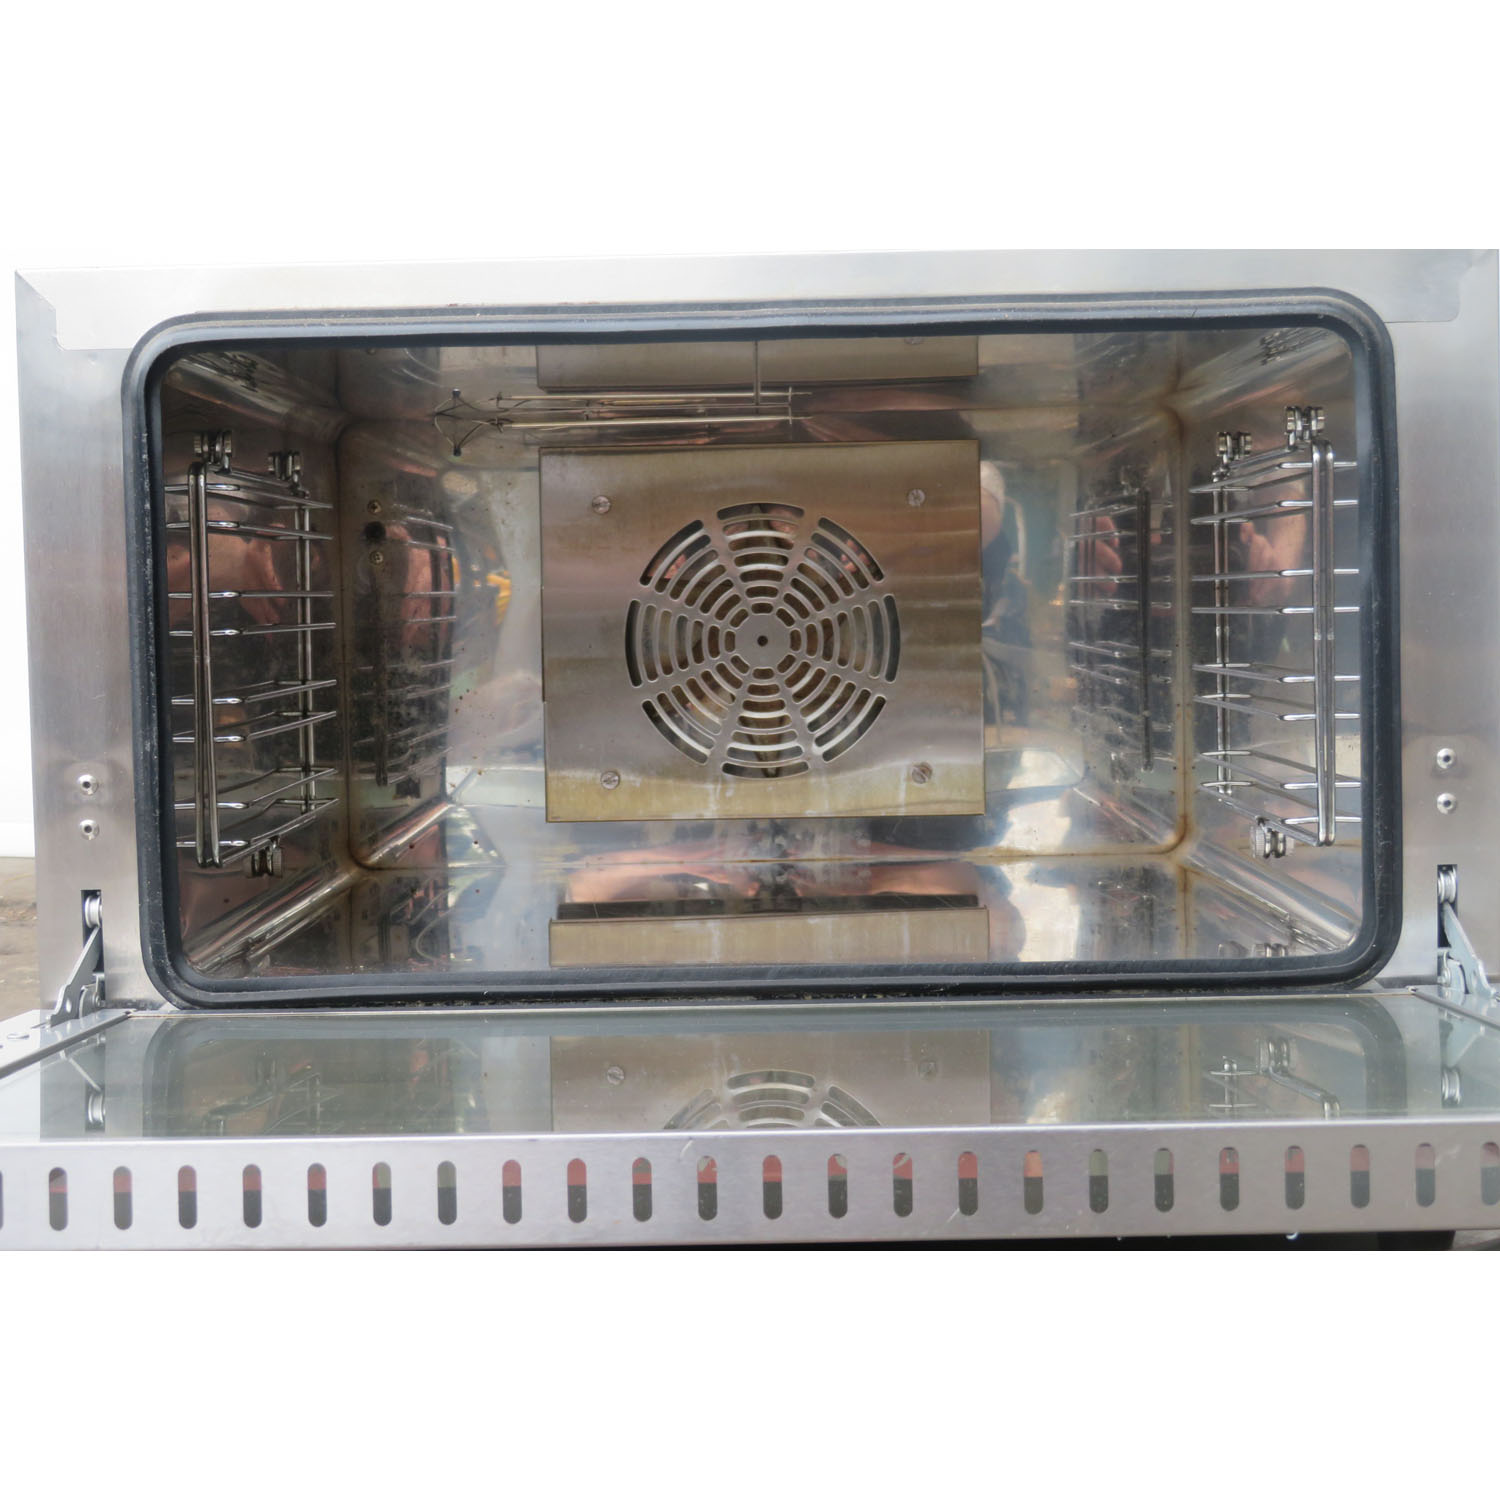 Avantco CO-16 Electric Countertop Oven - Silver/Red for sale